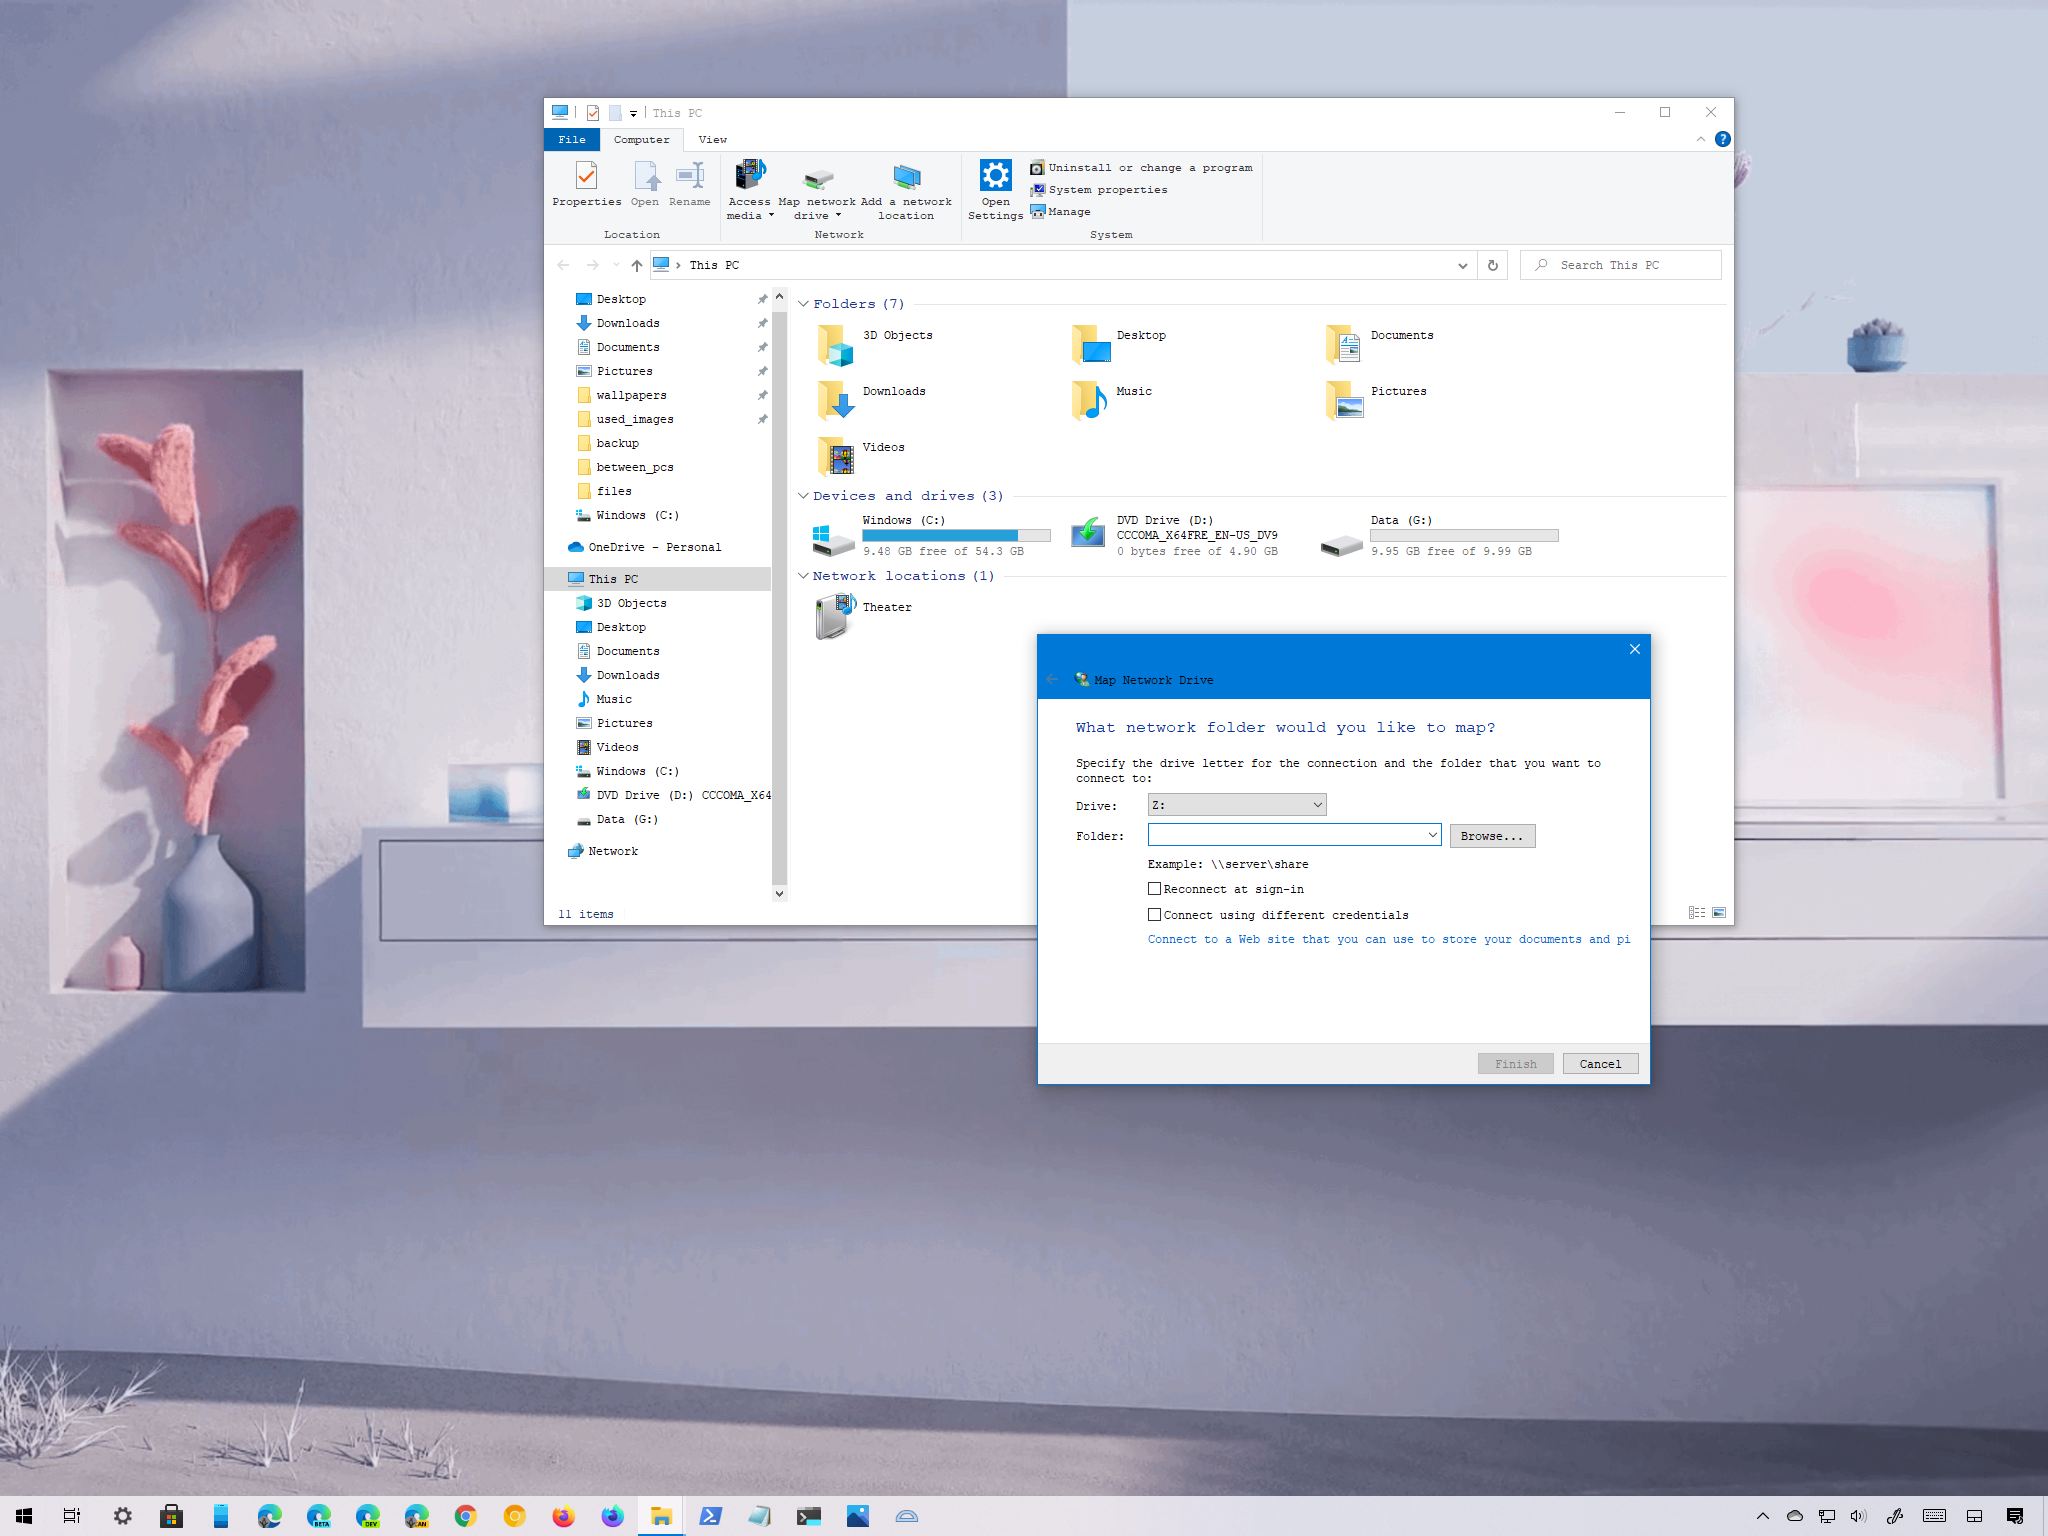 M & i windows windows 7 professional microsoft download